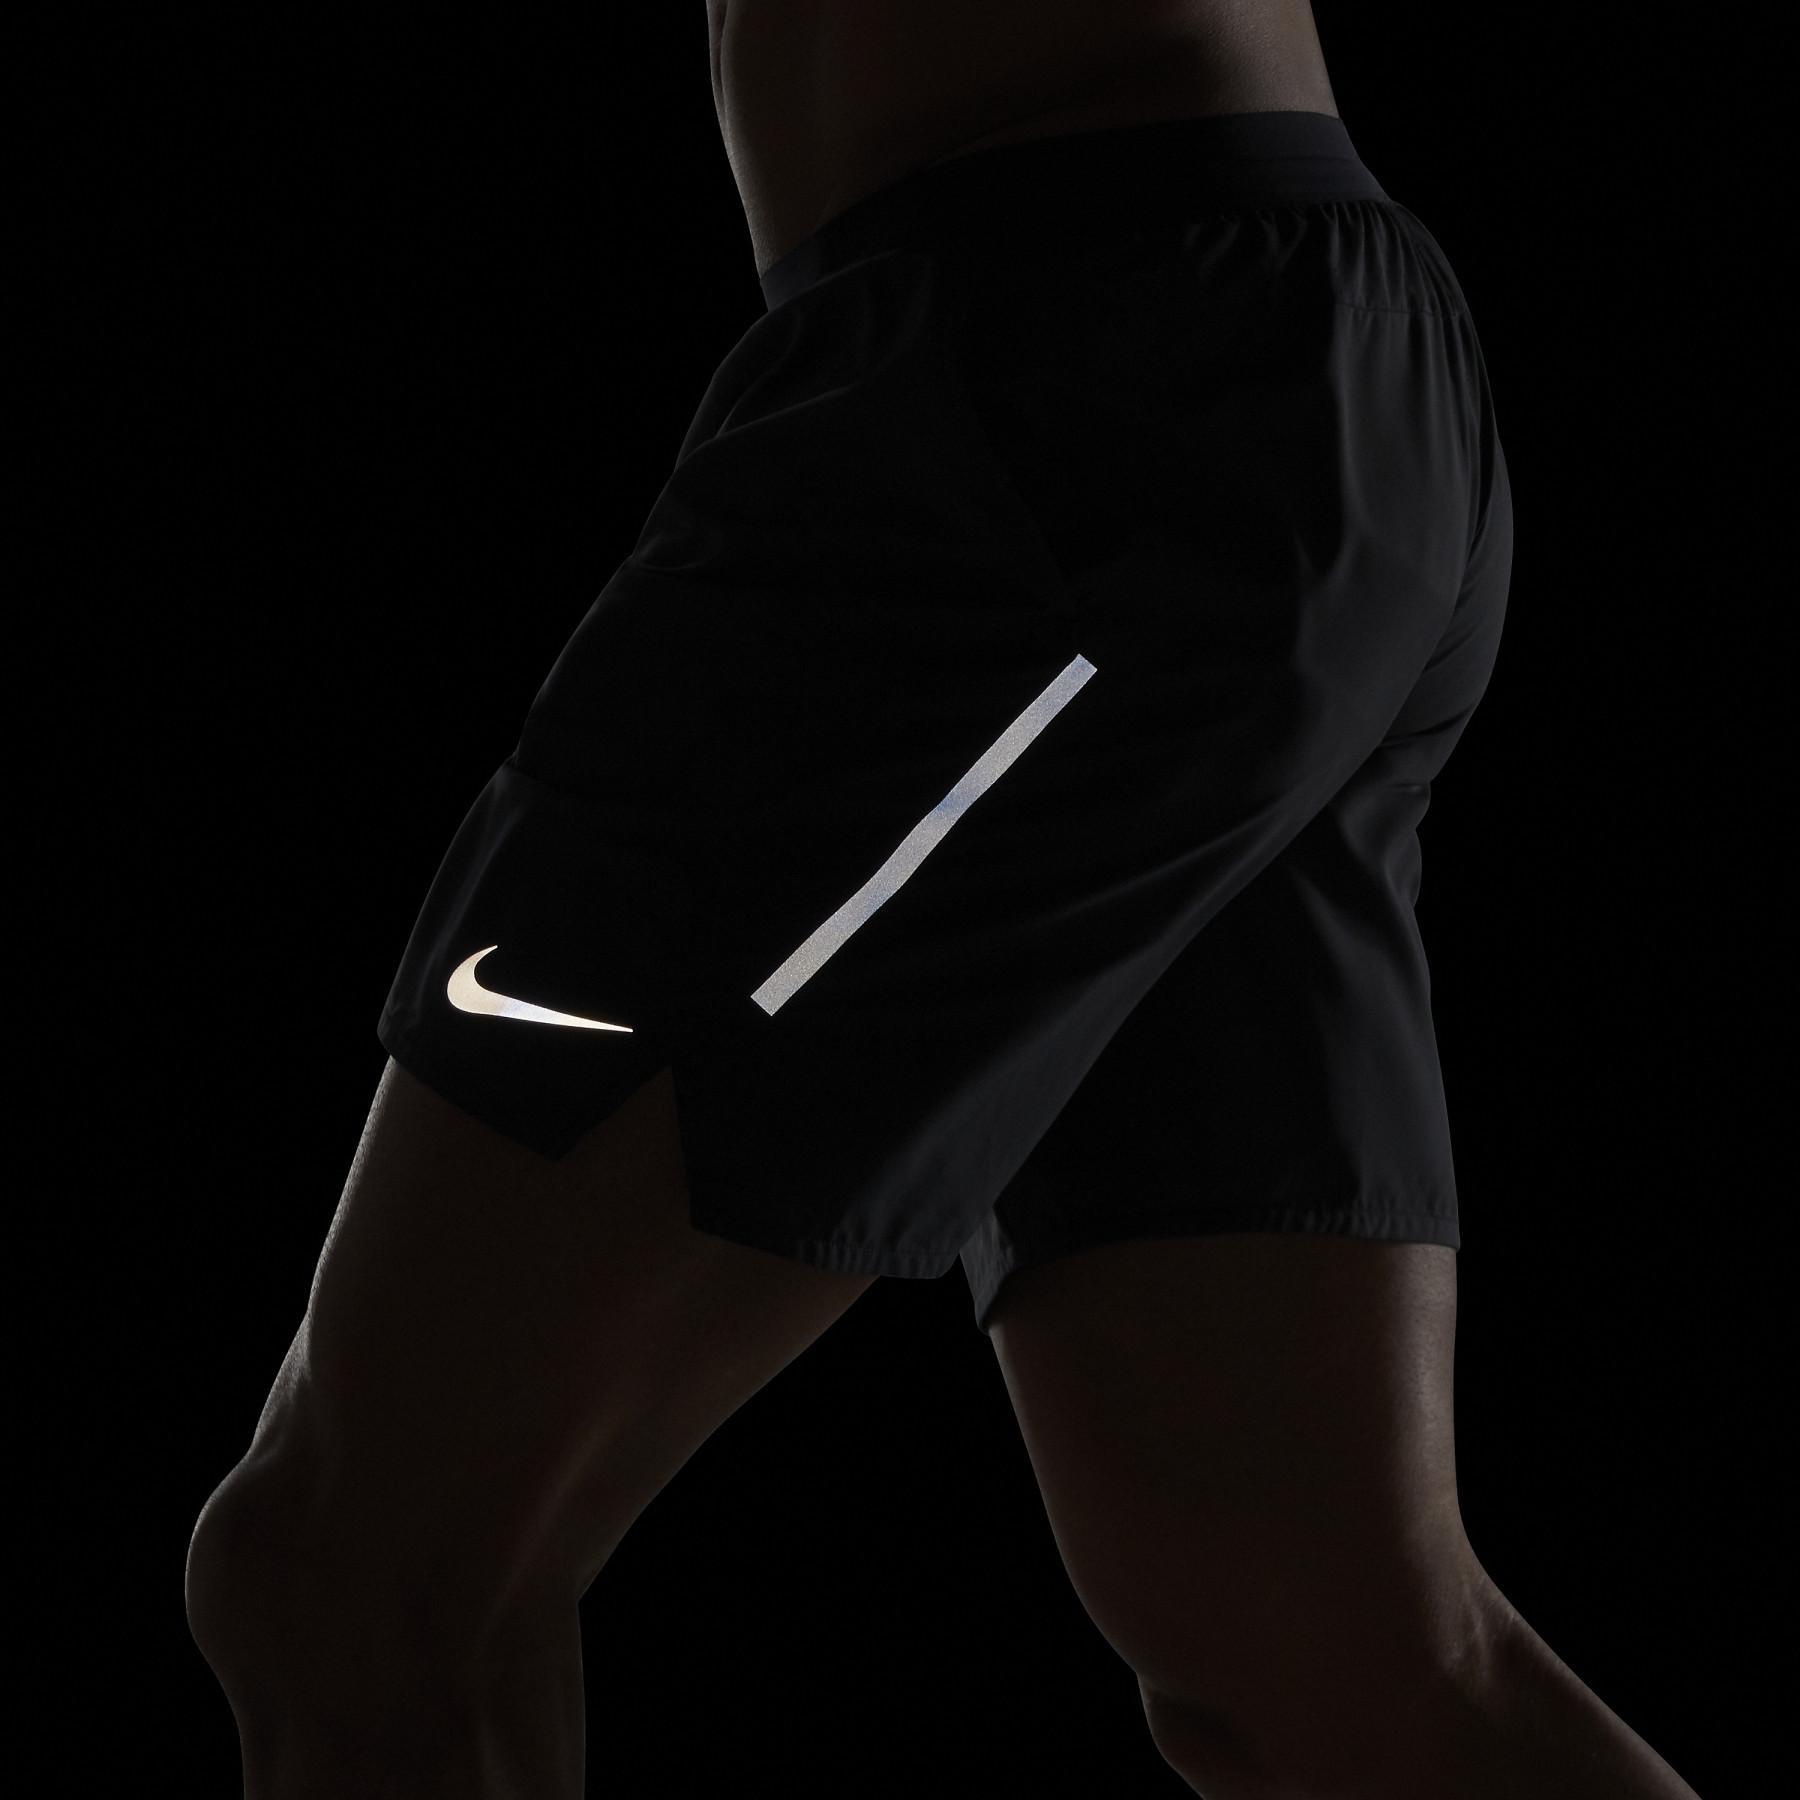 Short Nike Flex Stride Stretch